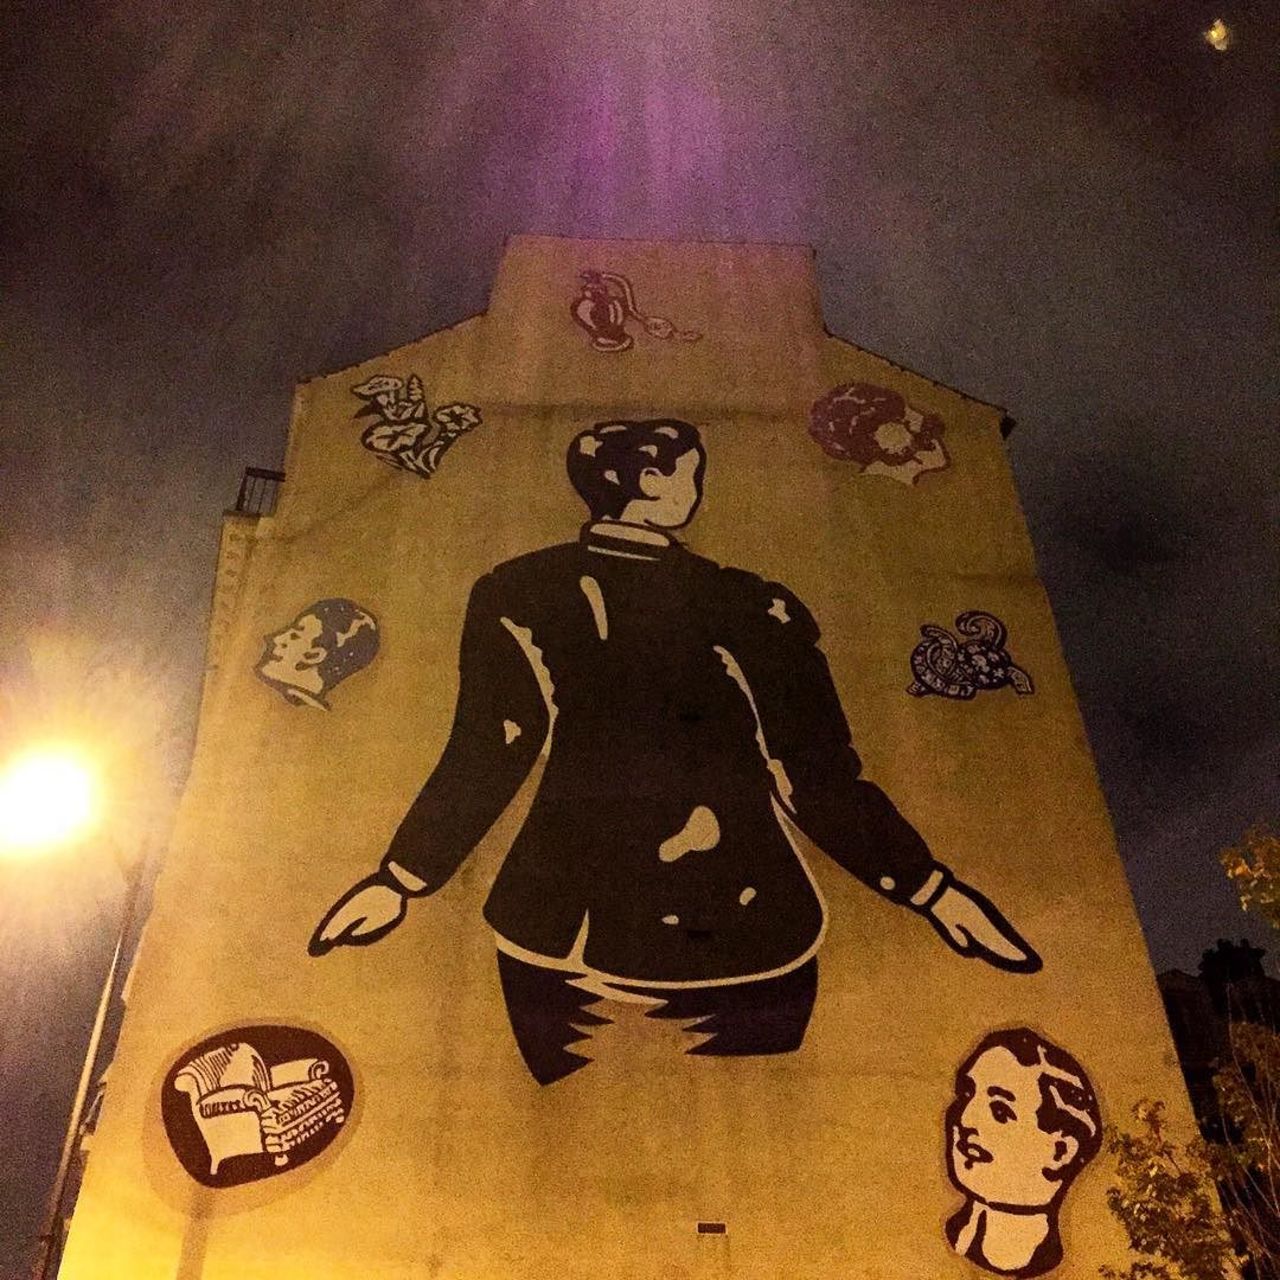 #Paris #graffiti photo by @came_a_yeux http://ift.tt/1Nv8Z4j #StreetArt https://t.co/8S4FO2lDm2